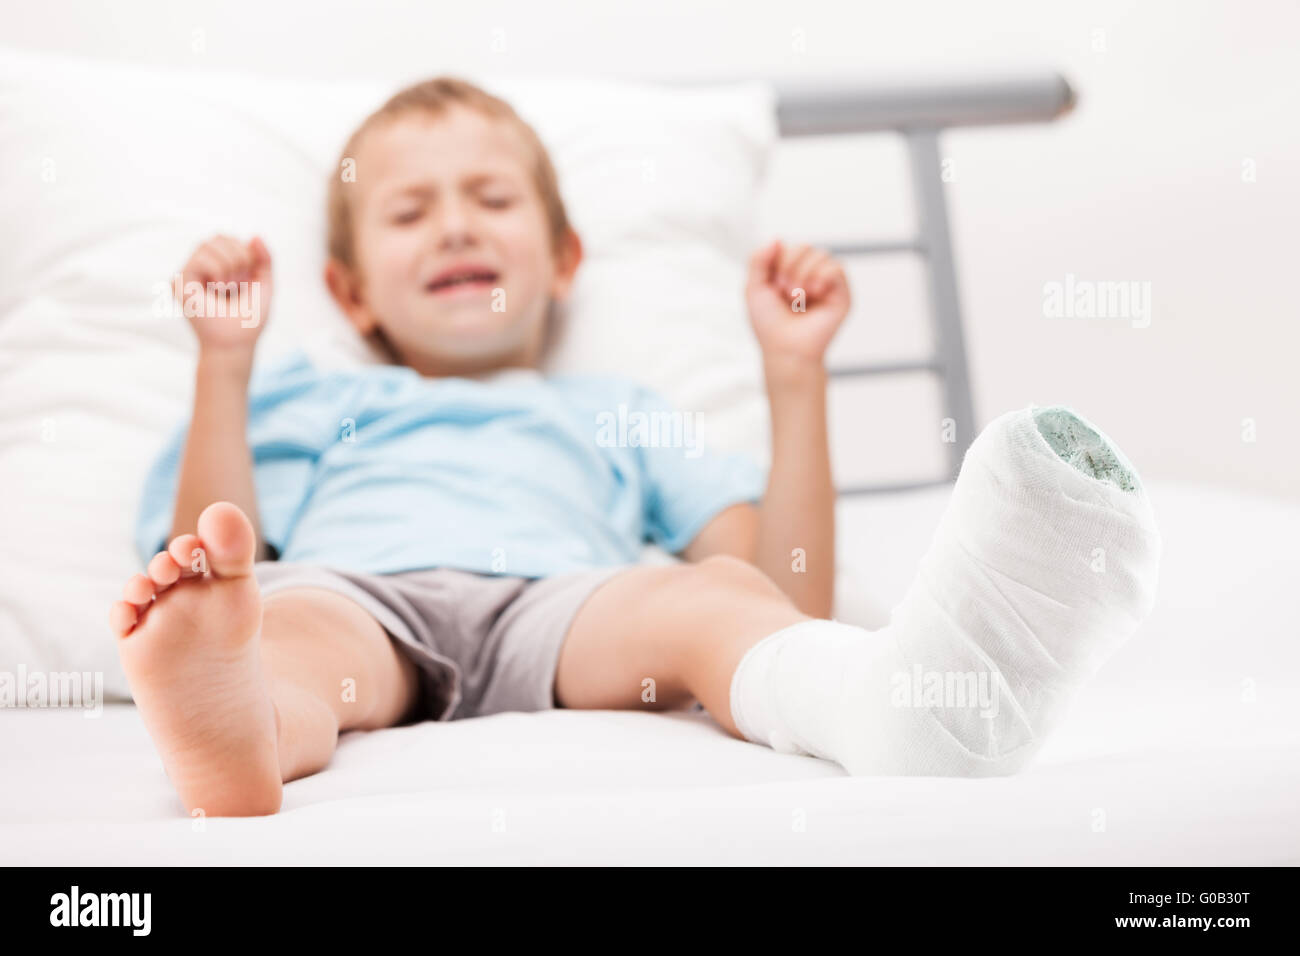 Little child boy with plaster bandage on leg heel Stock Photo